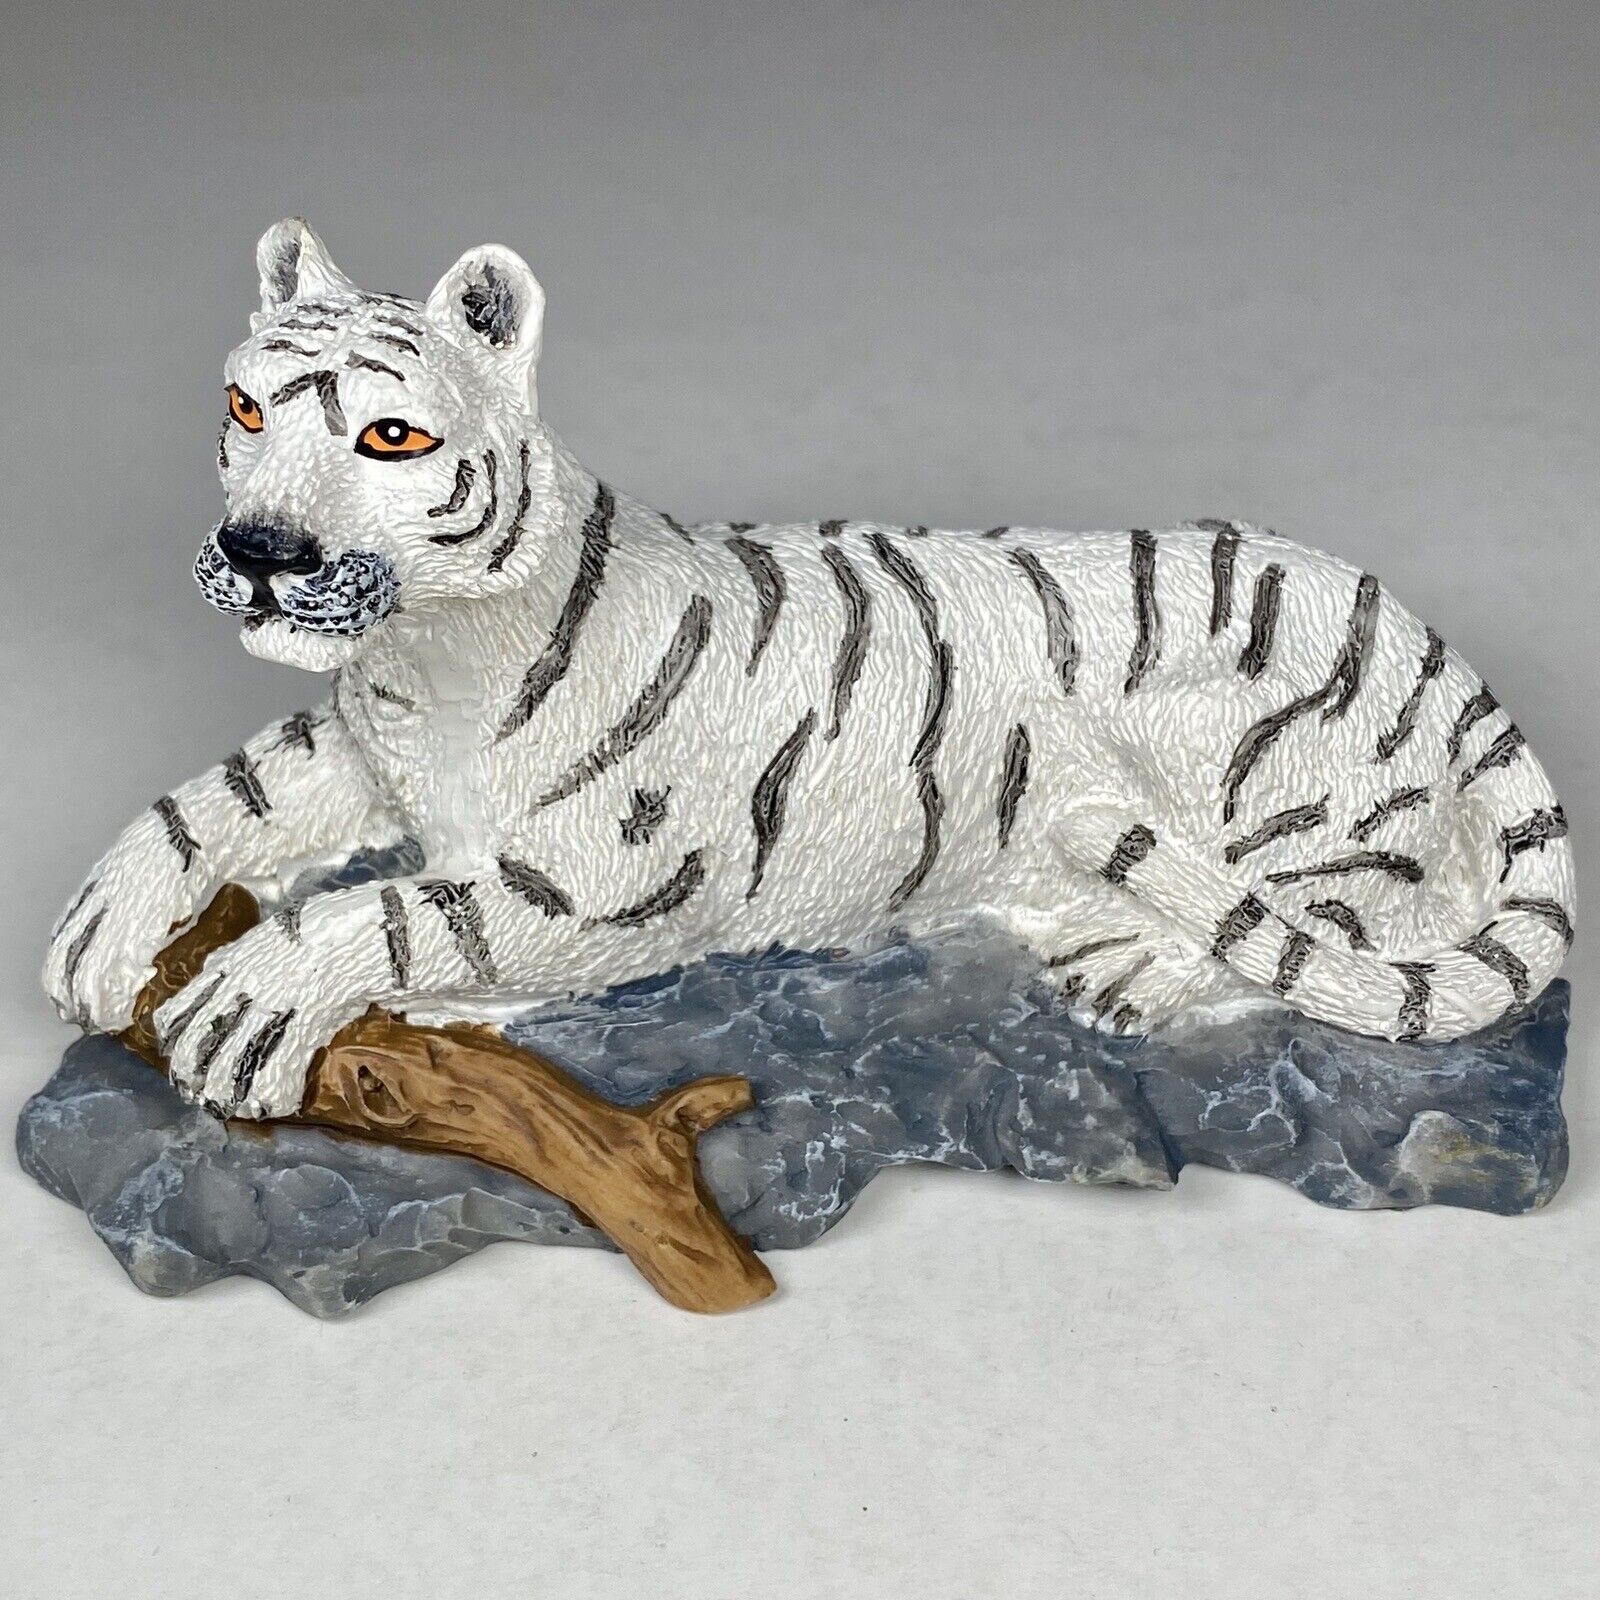 Ceramic World Inc White Tiger Lying On Rocks Figure 8527 Figurine Resin Statue